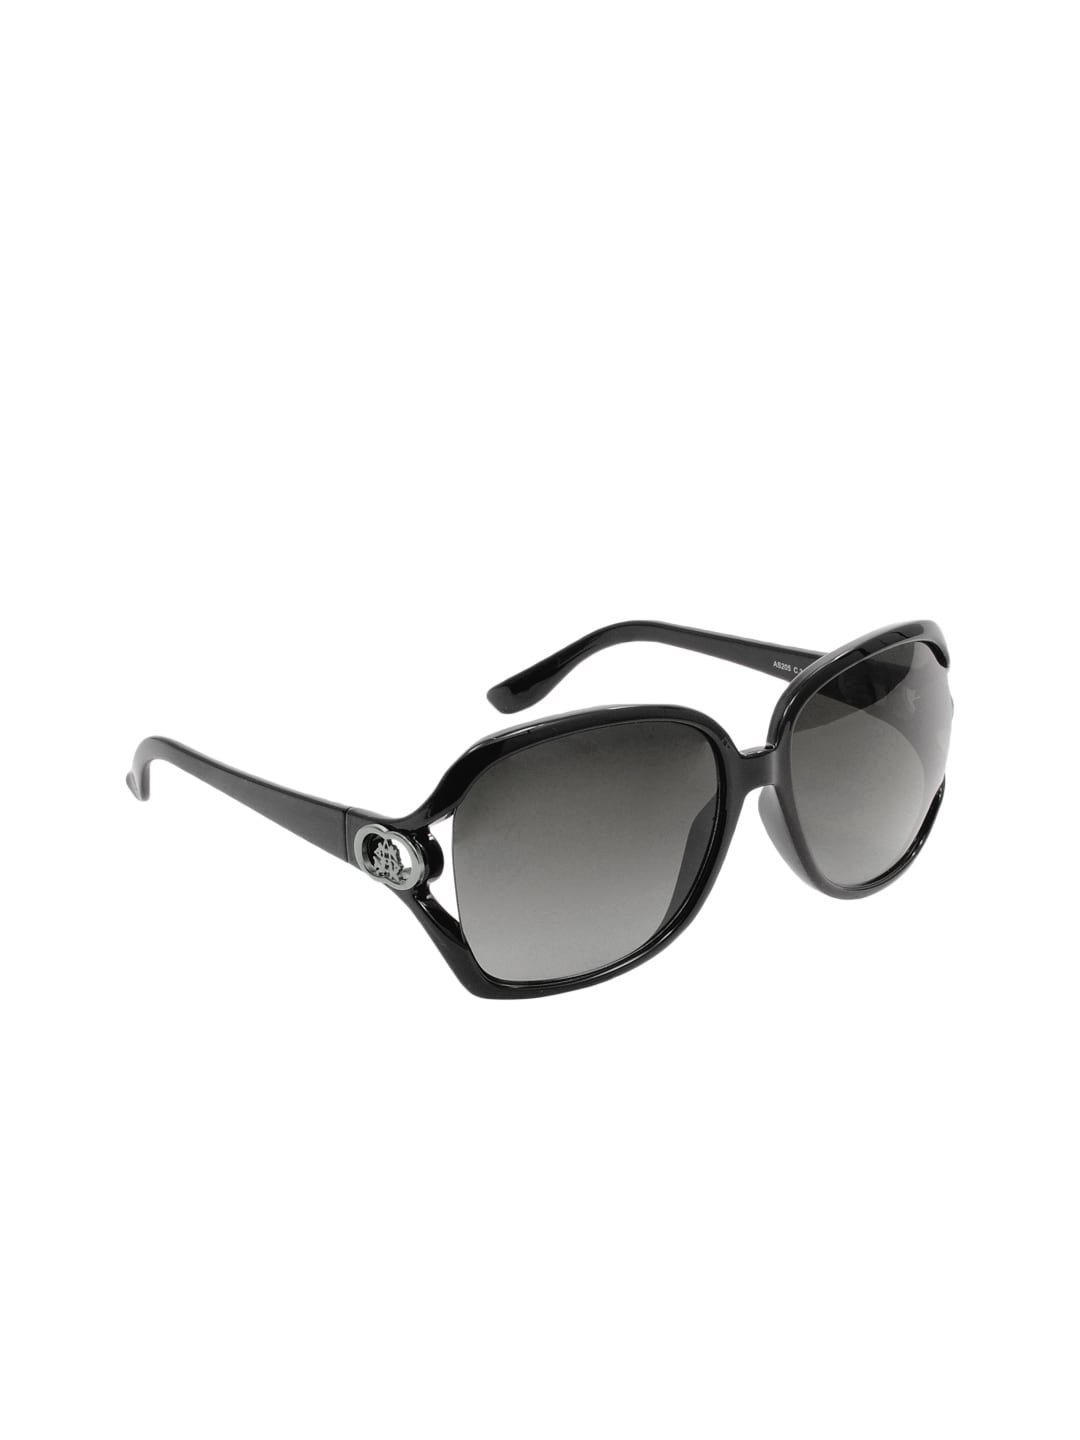 Allen Solly Women Oversized Sunglasses AS205-C1